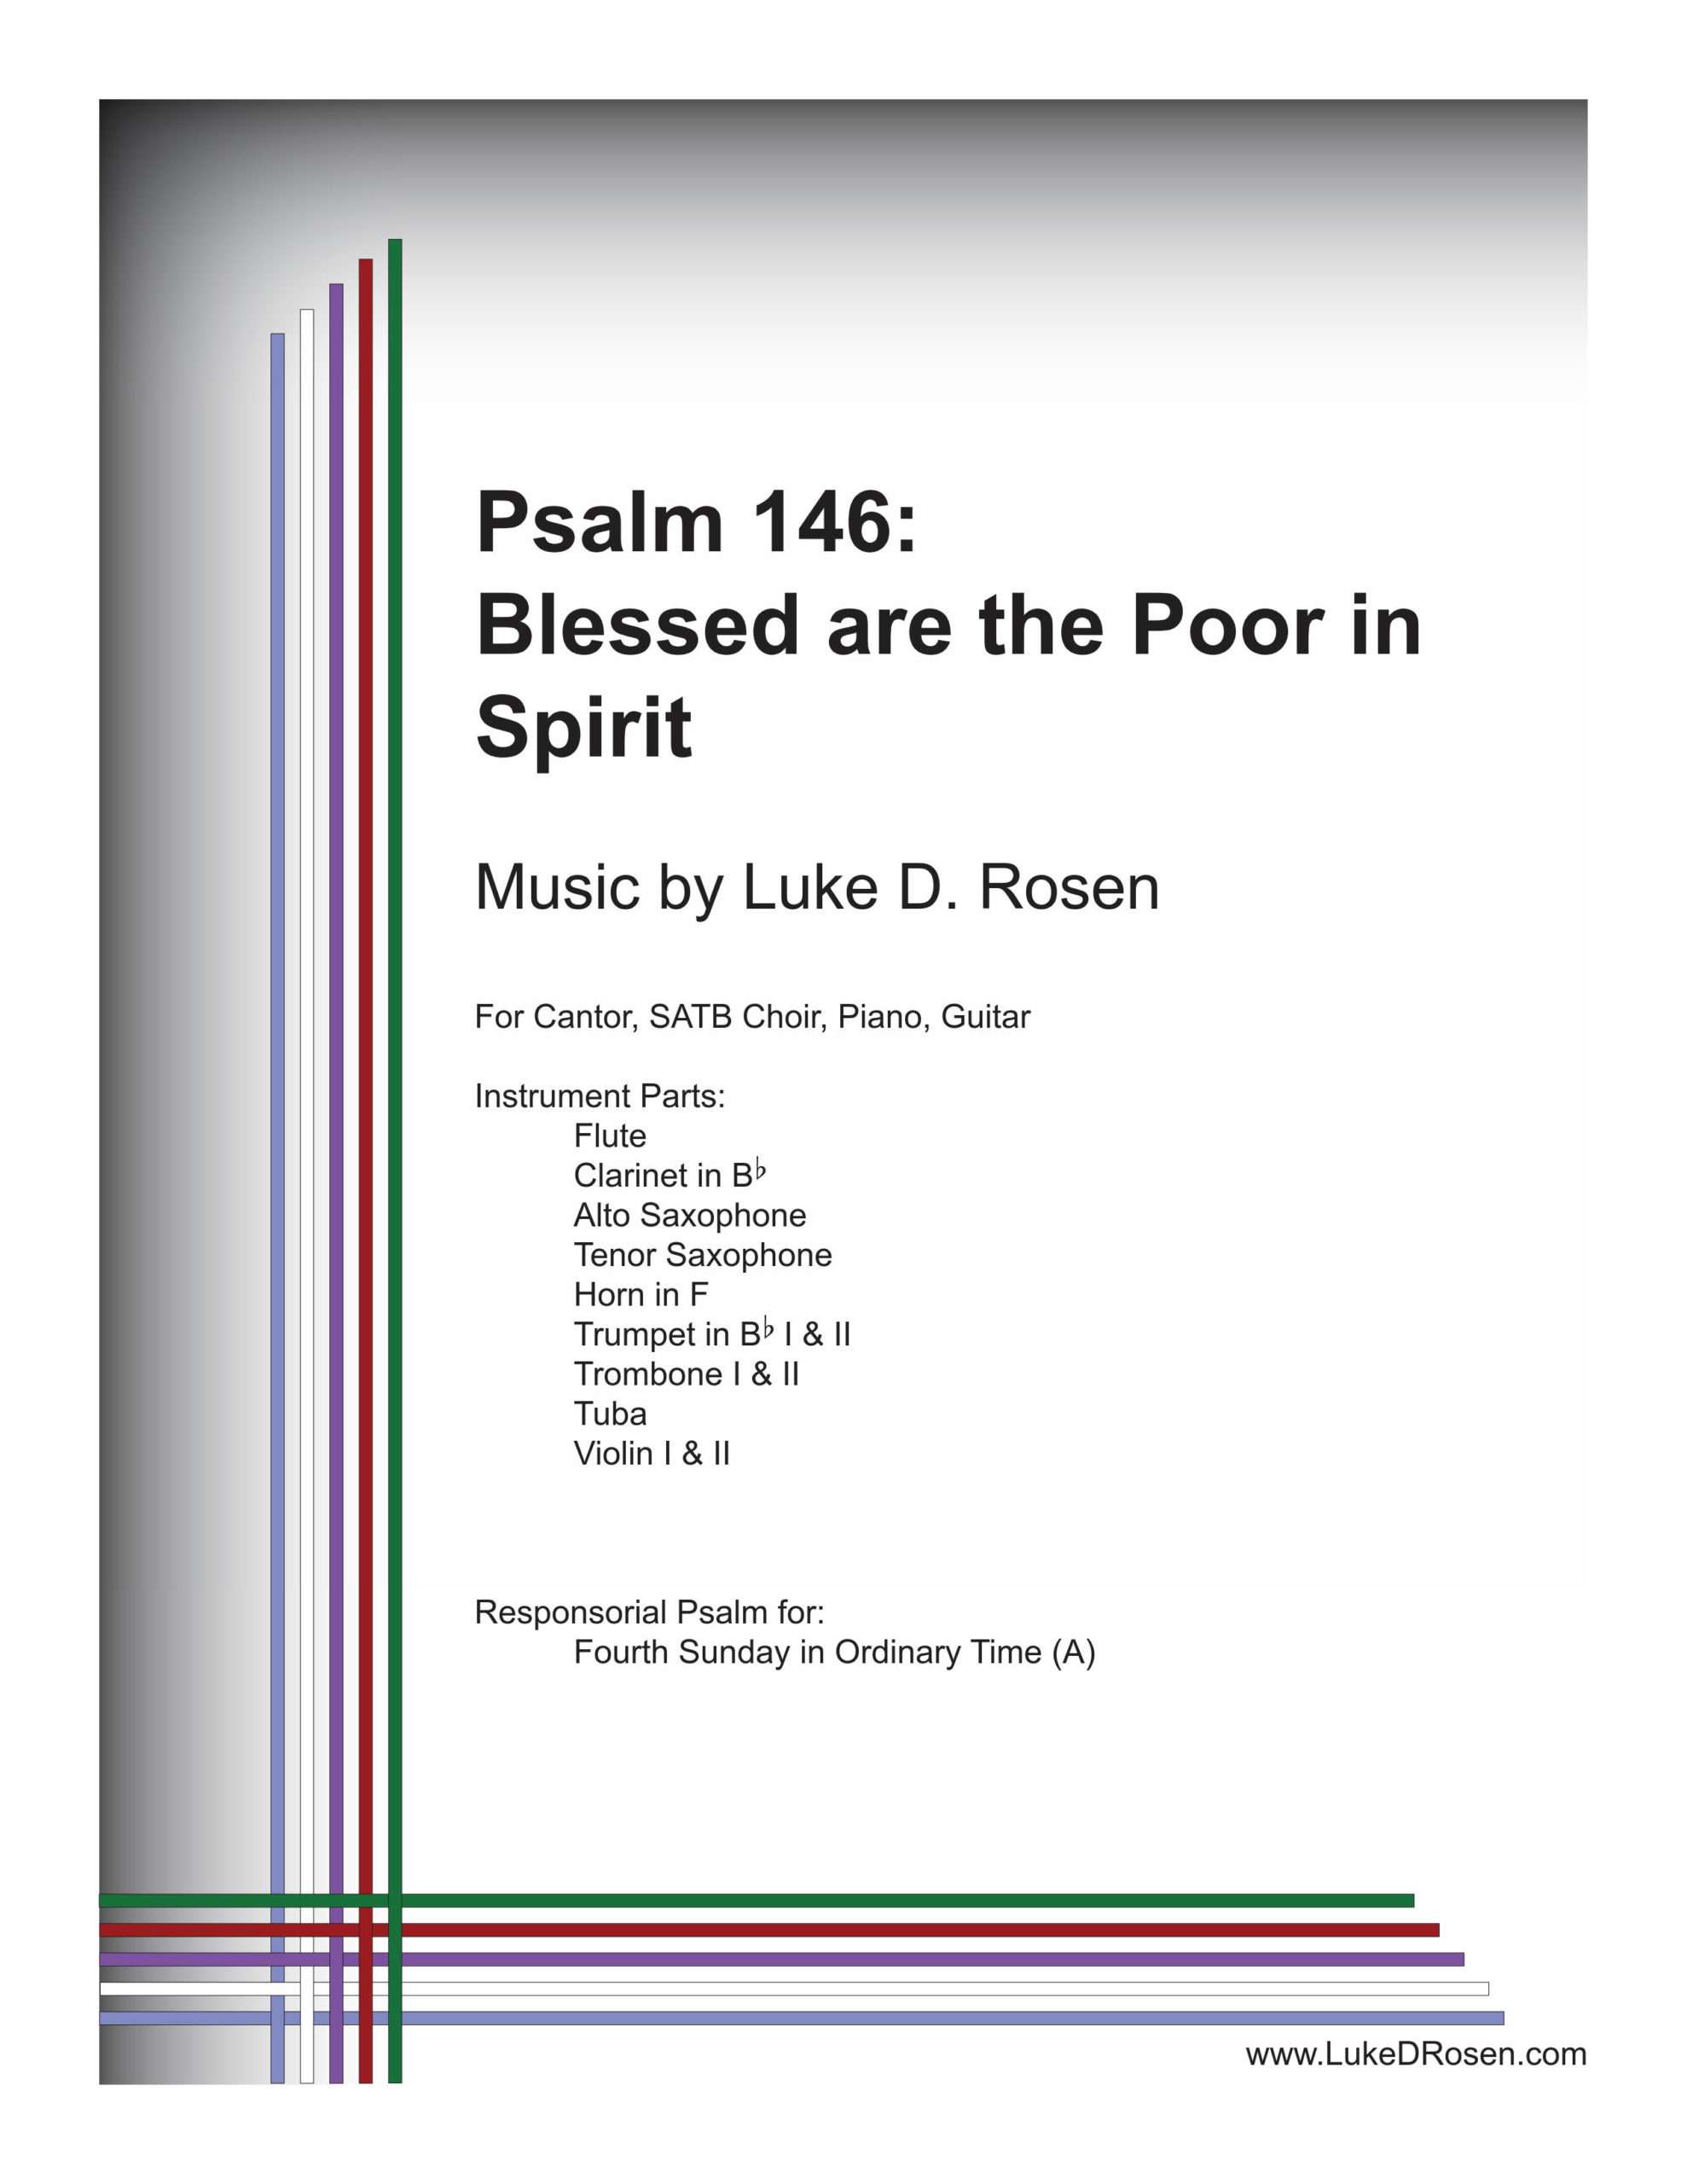 Psalm 146 – Blessed are the Poor in Spirit (Rosen)